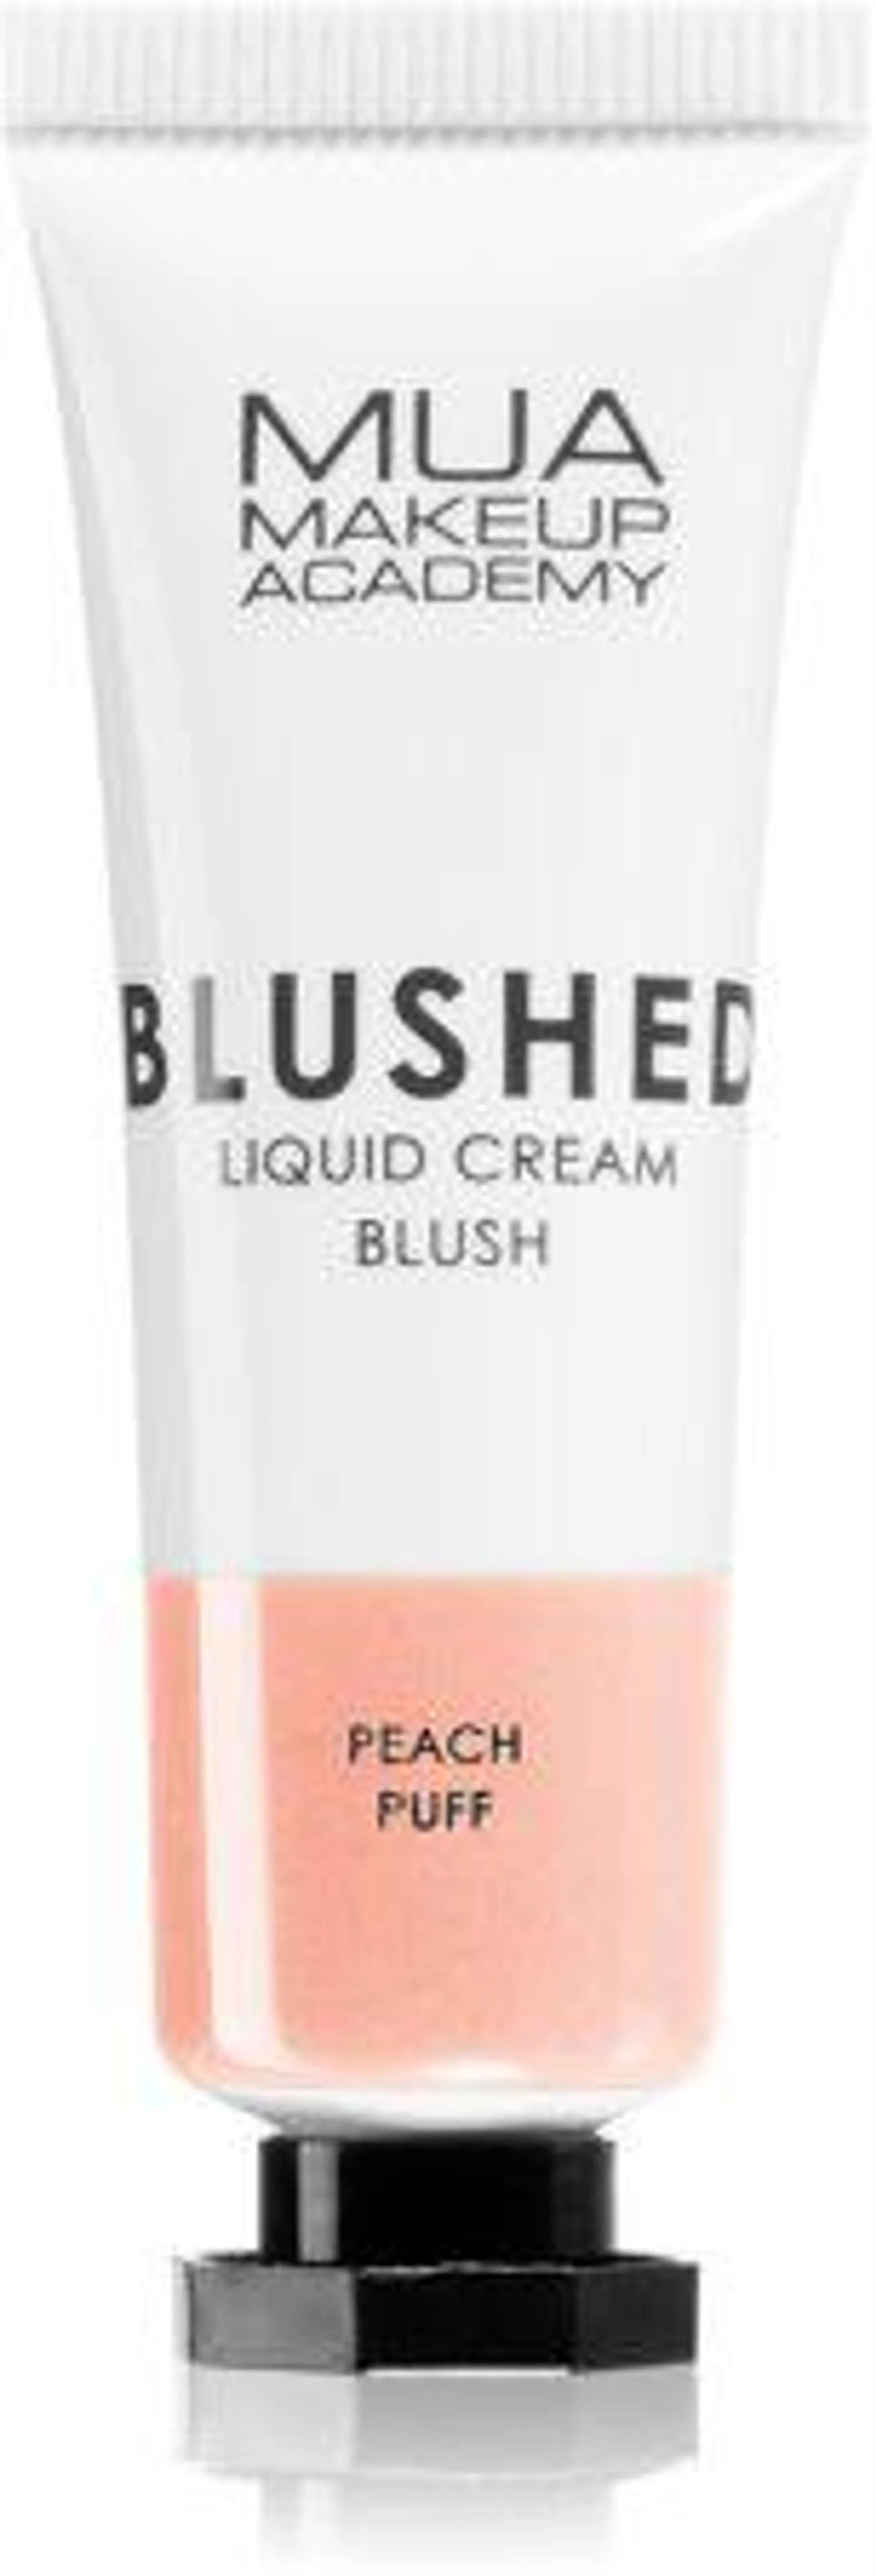 Blushed Liquid Blusher